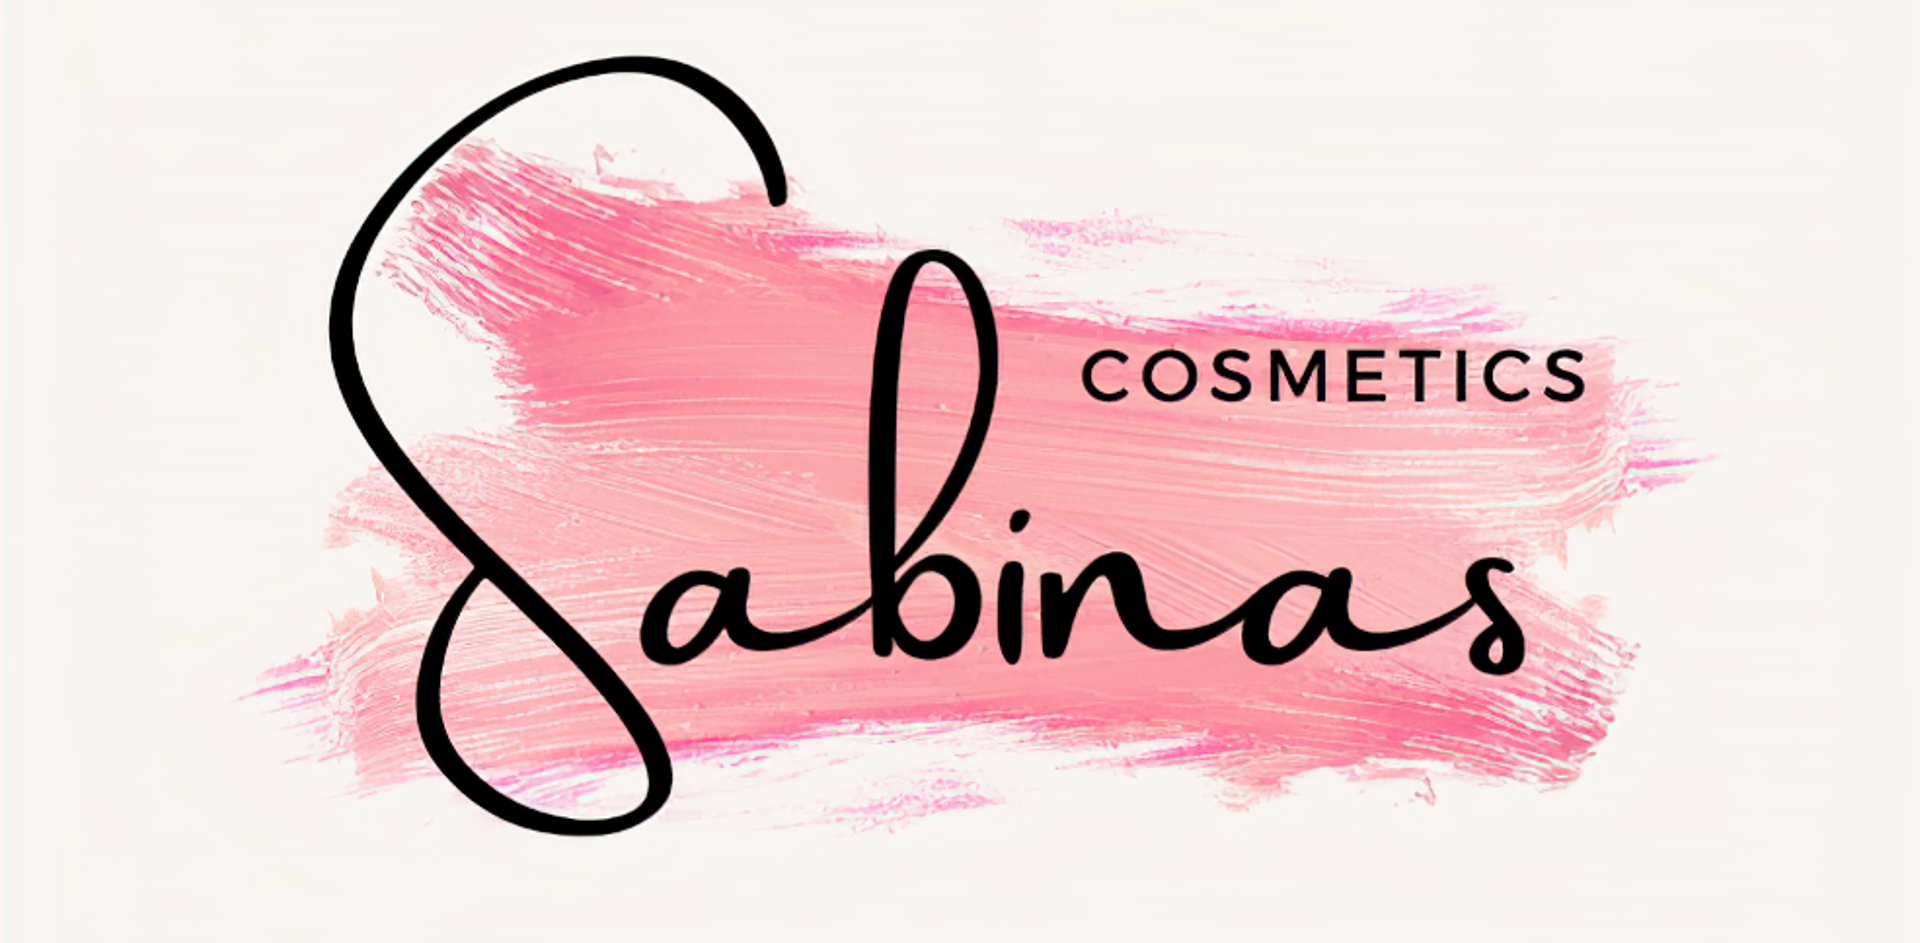 Sabinas Cosmetics